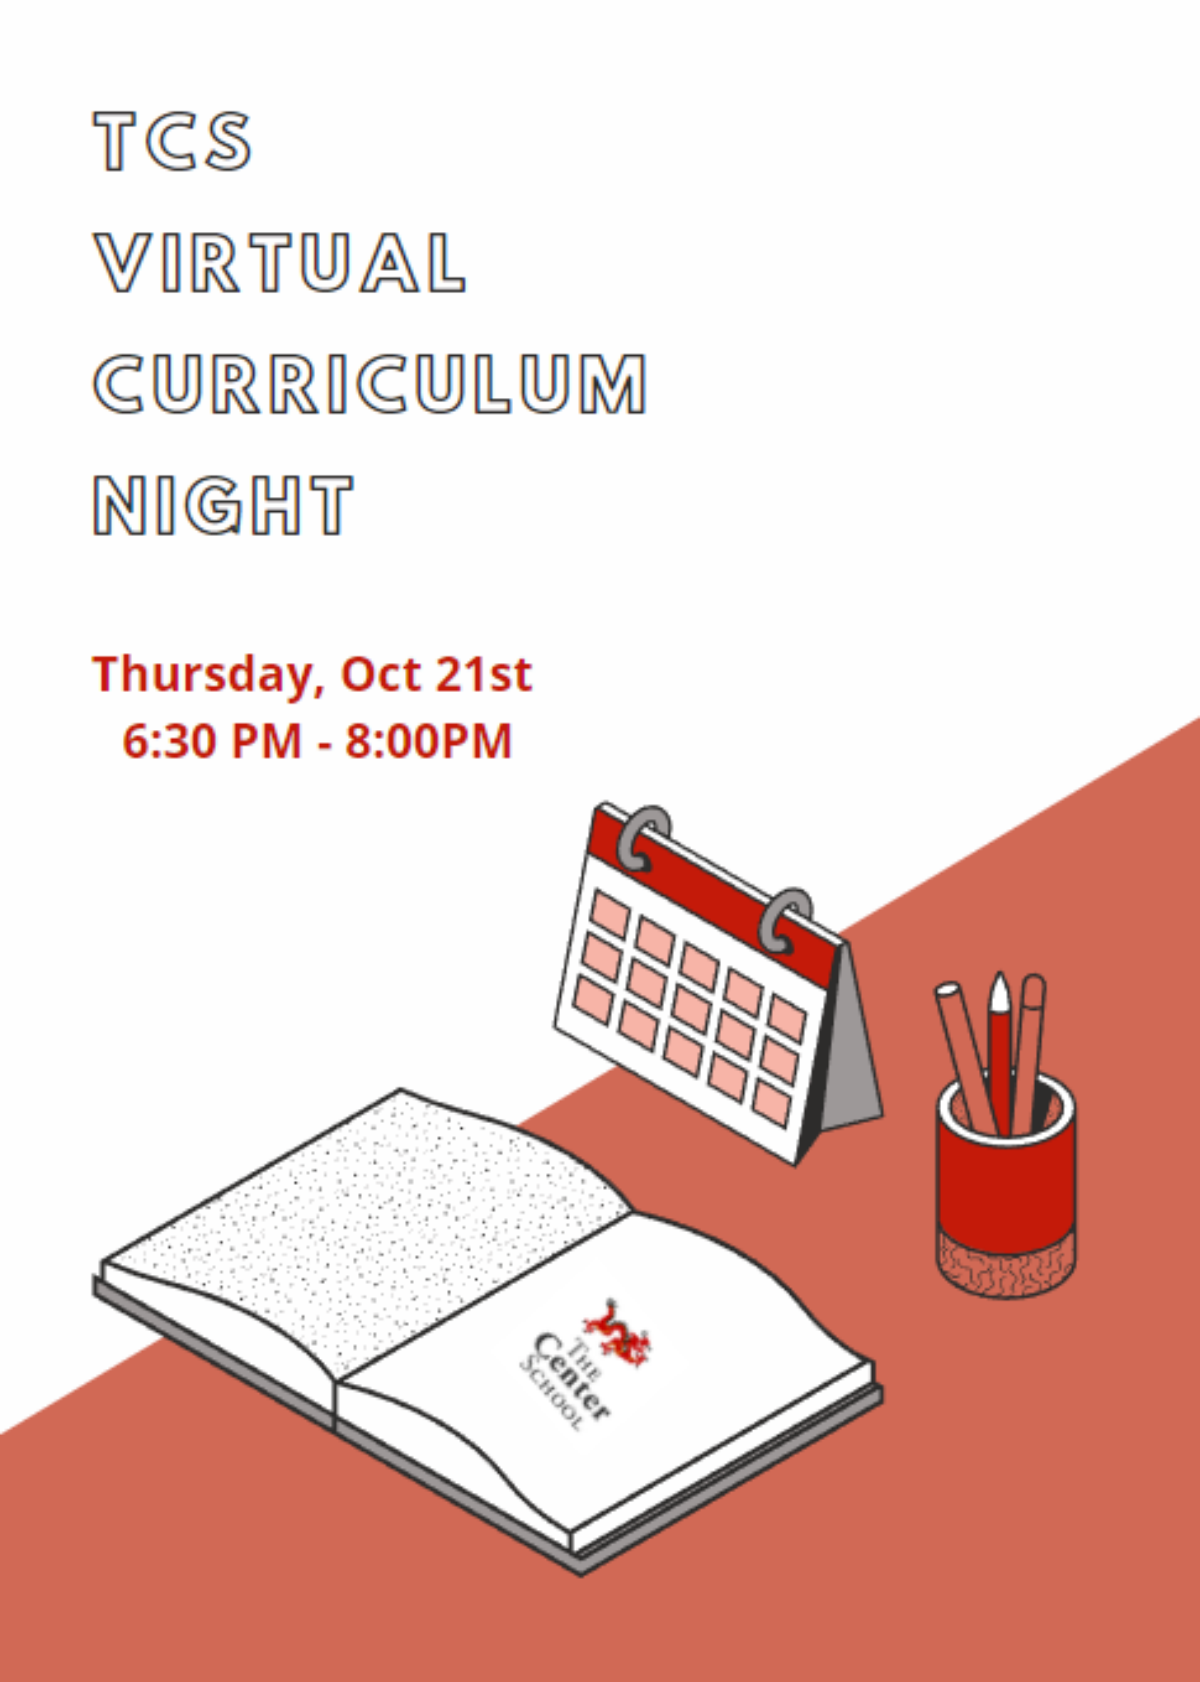 TCS Virtual Curruculum night thursday, october 21st 6:30-8